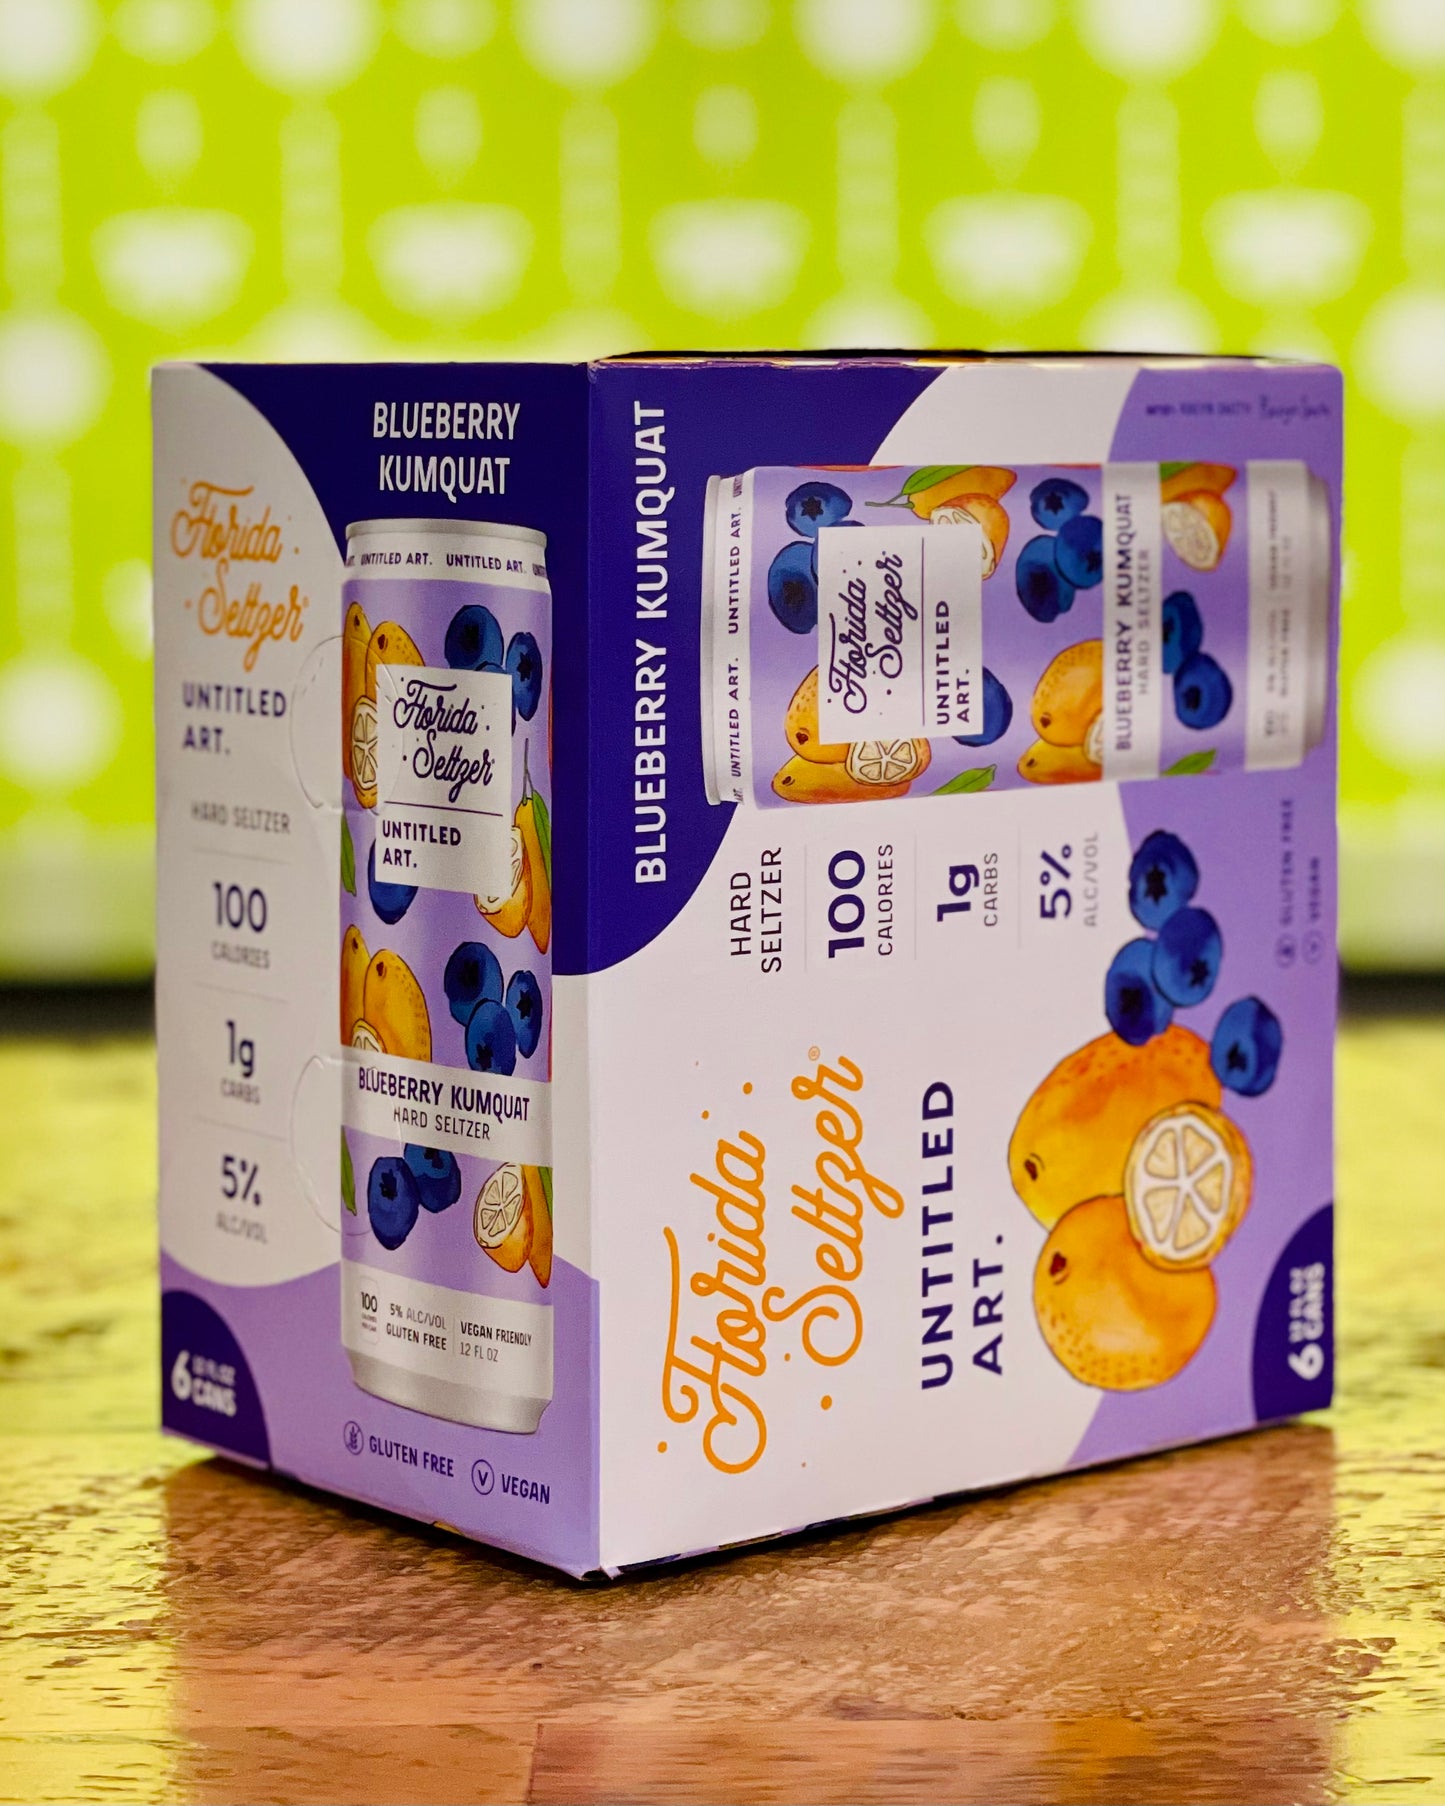 Untitled Art Blueberry Kumquat FL Seltzer - 6 Pack, 12oz Cans